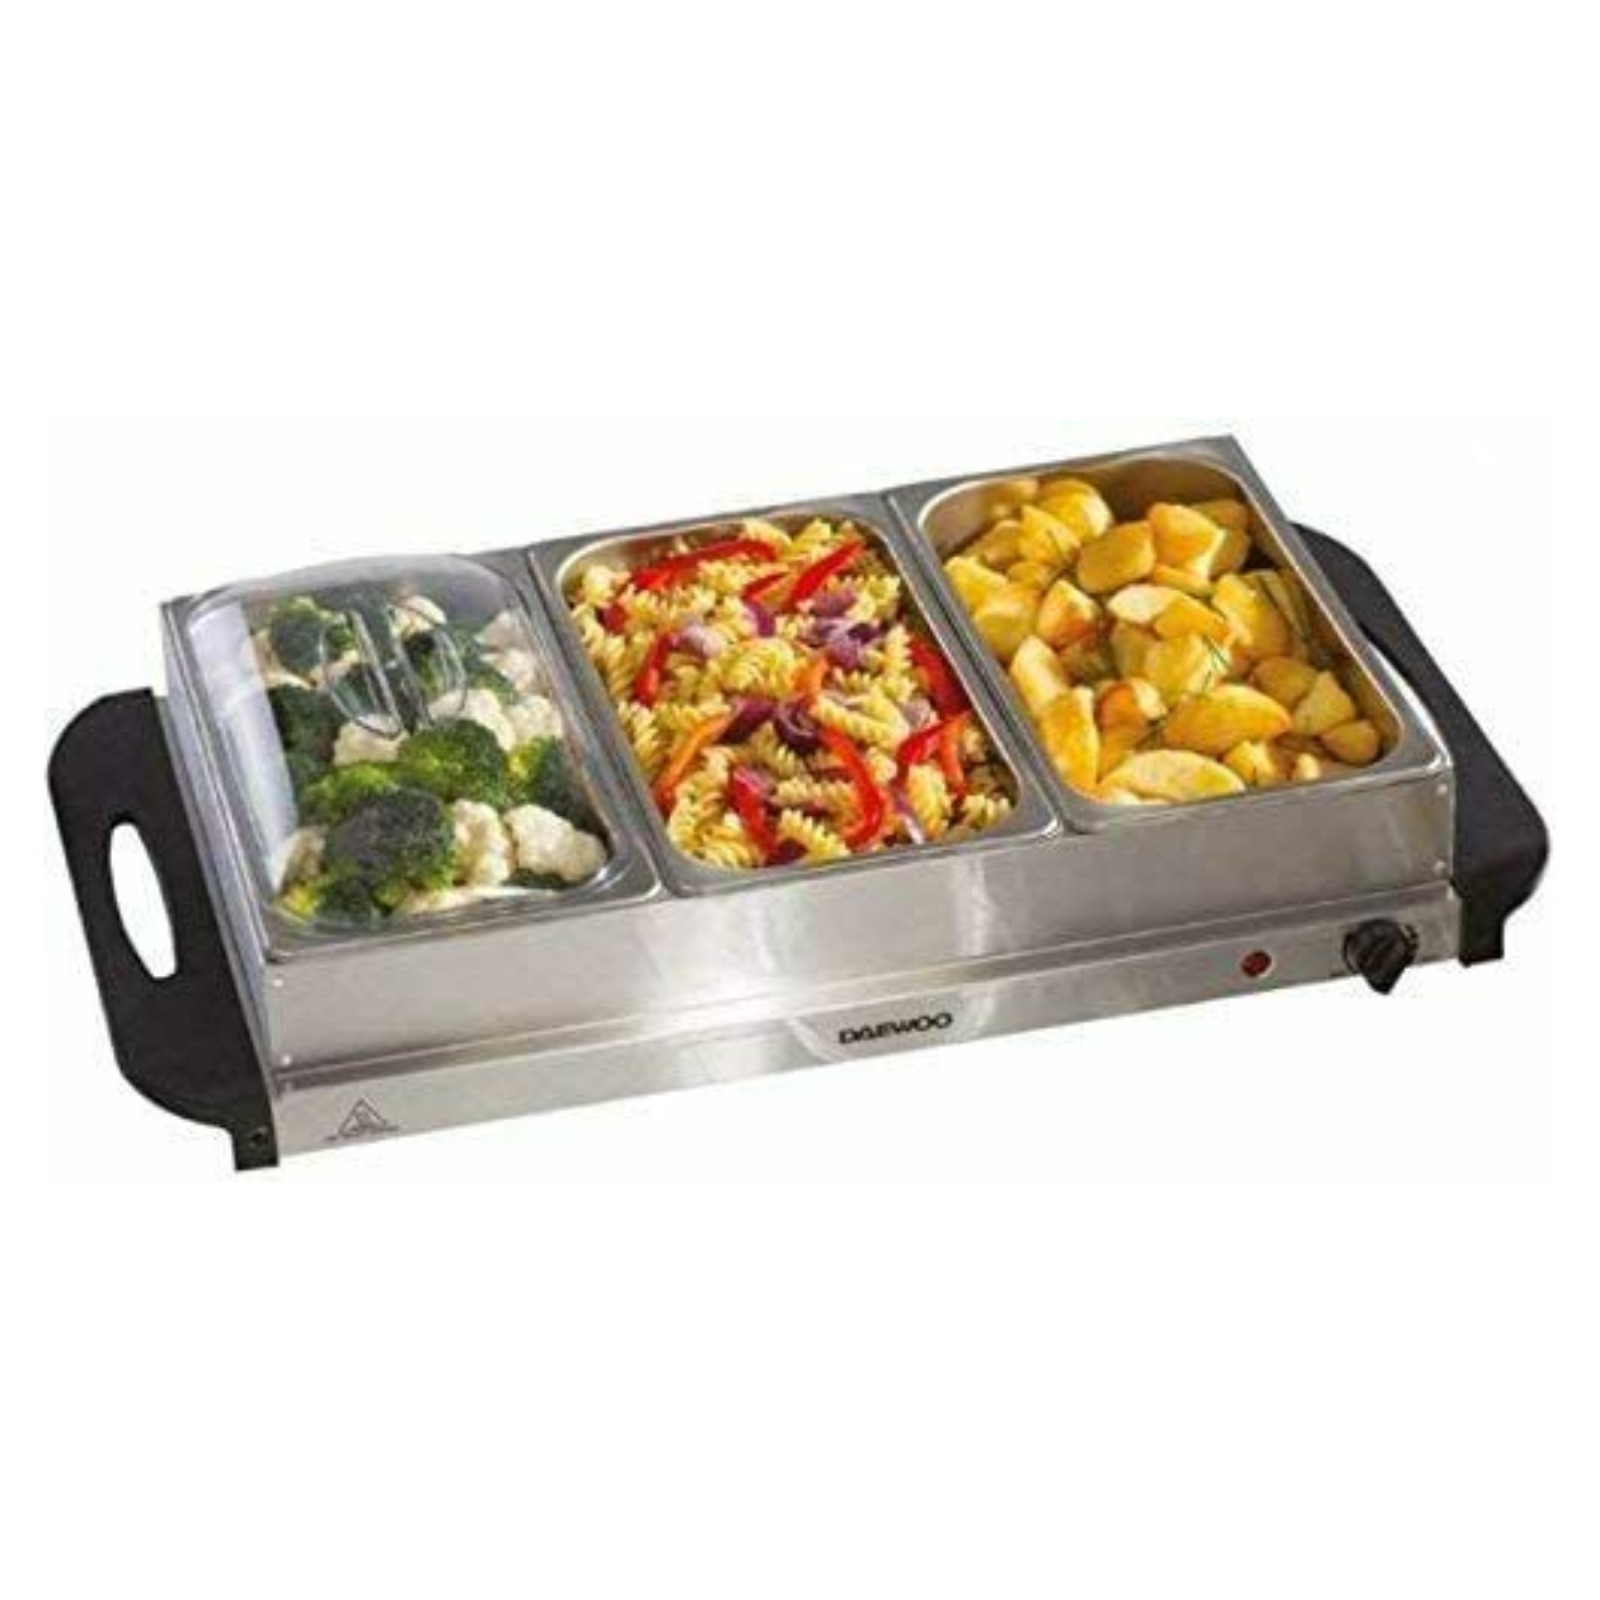 Daewoo Small Electric Buffet Server 4.5 L Food and Plate Warmer, Wayfair.co.uk